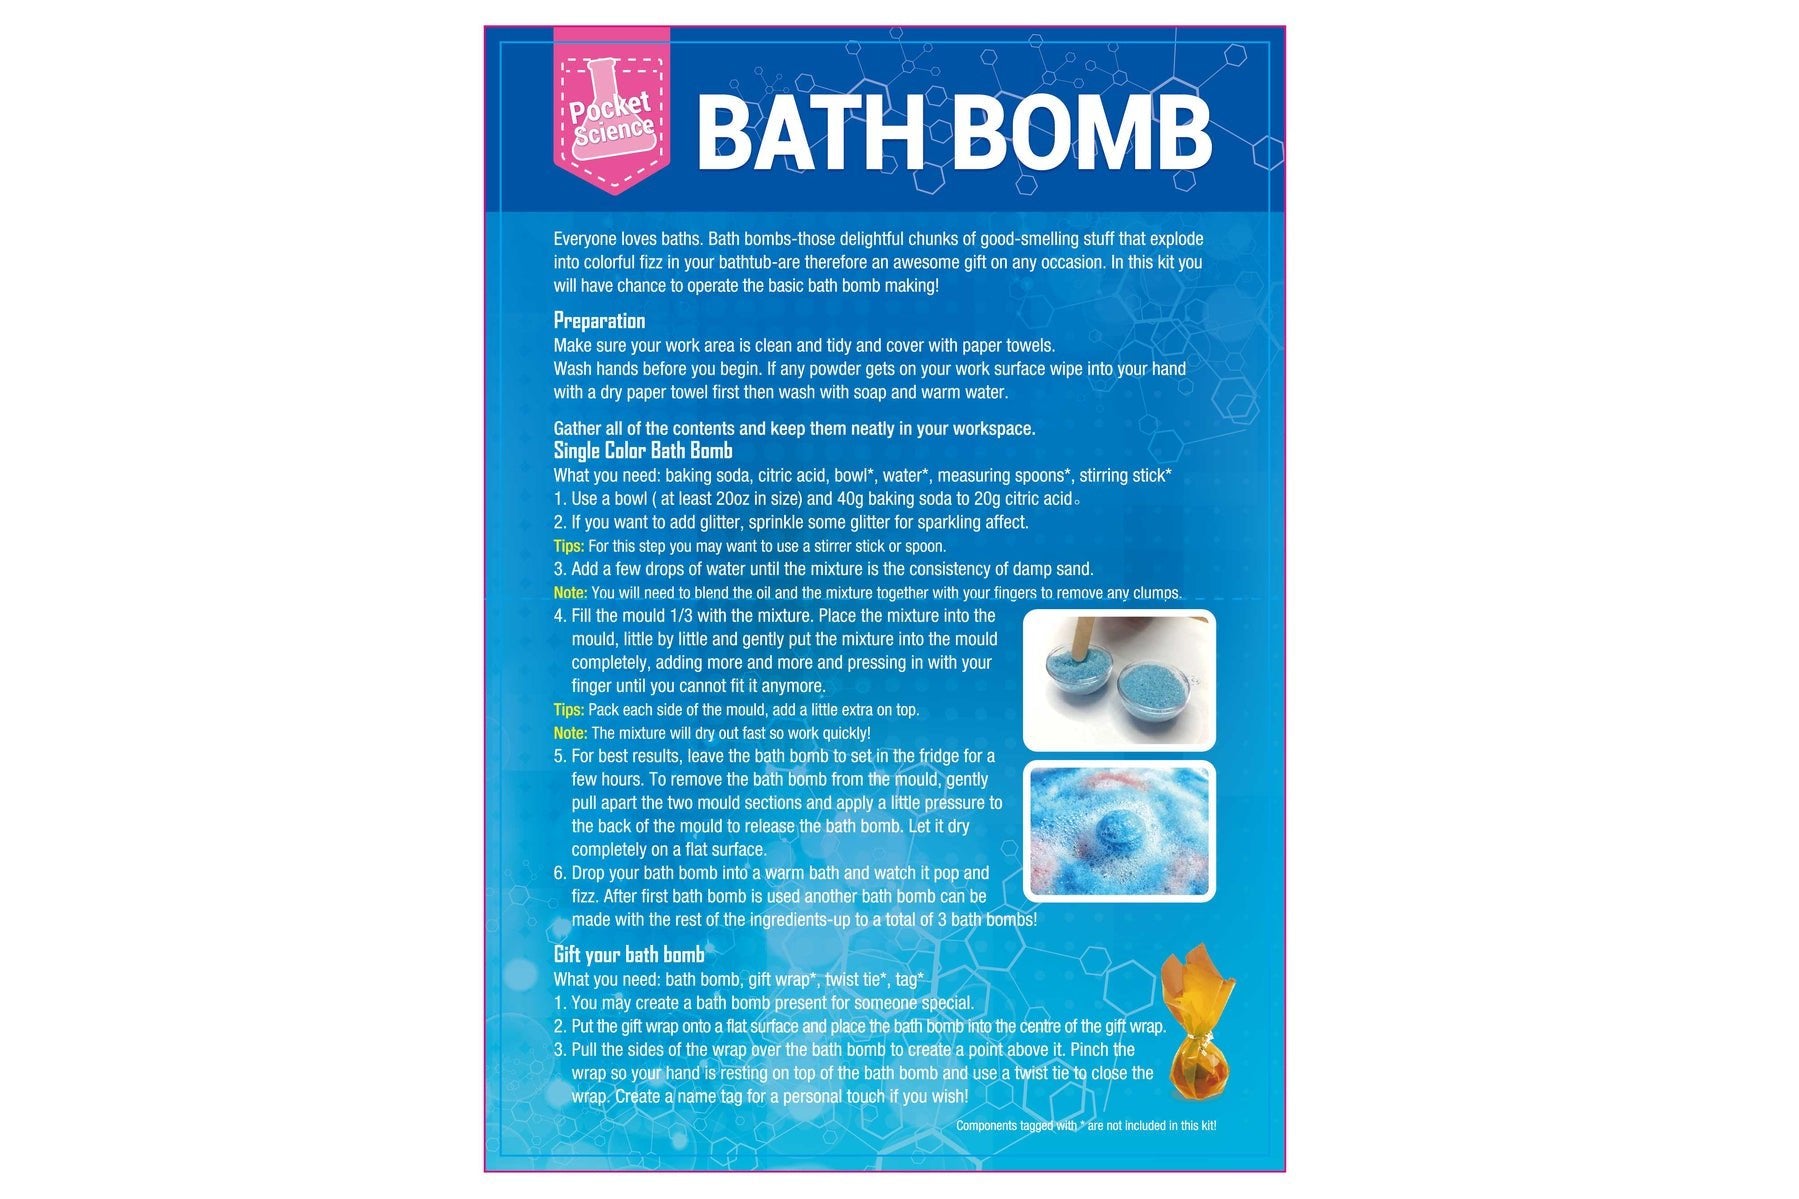 Bath Bomb Kit Contents